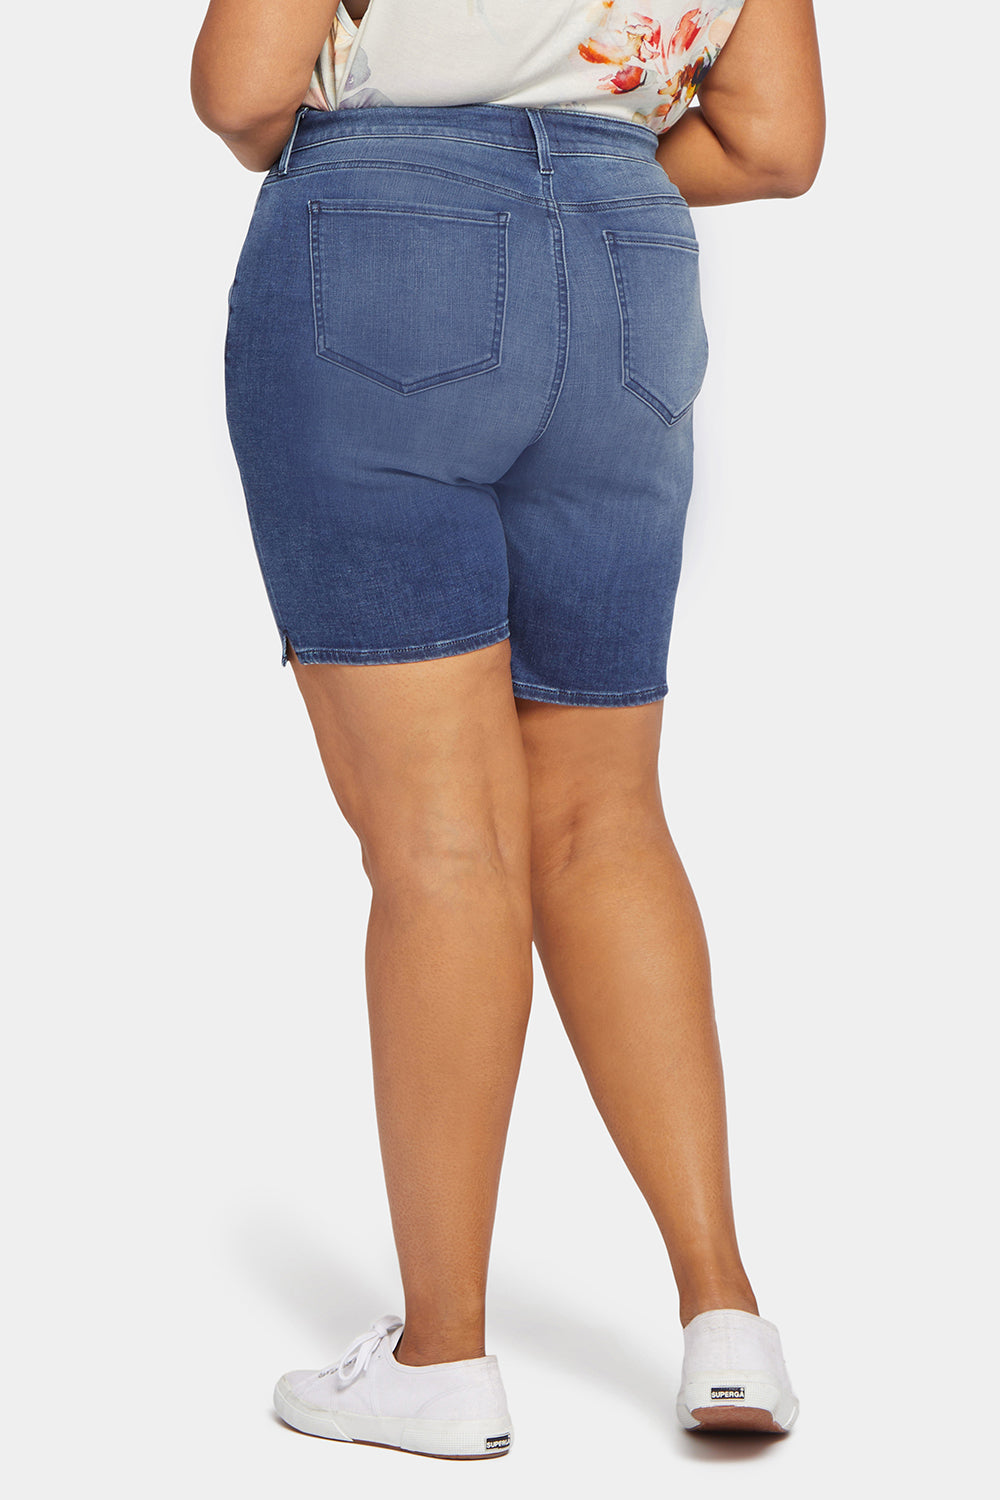 NYDJ Ella Denim Shorts In Plus Size With Side Slits - Bluewell